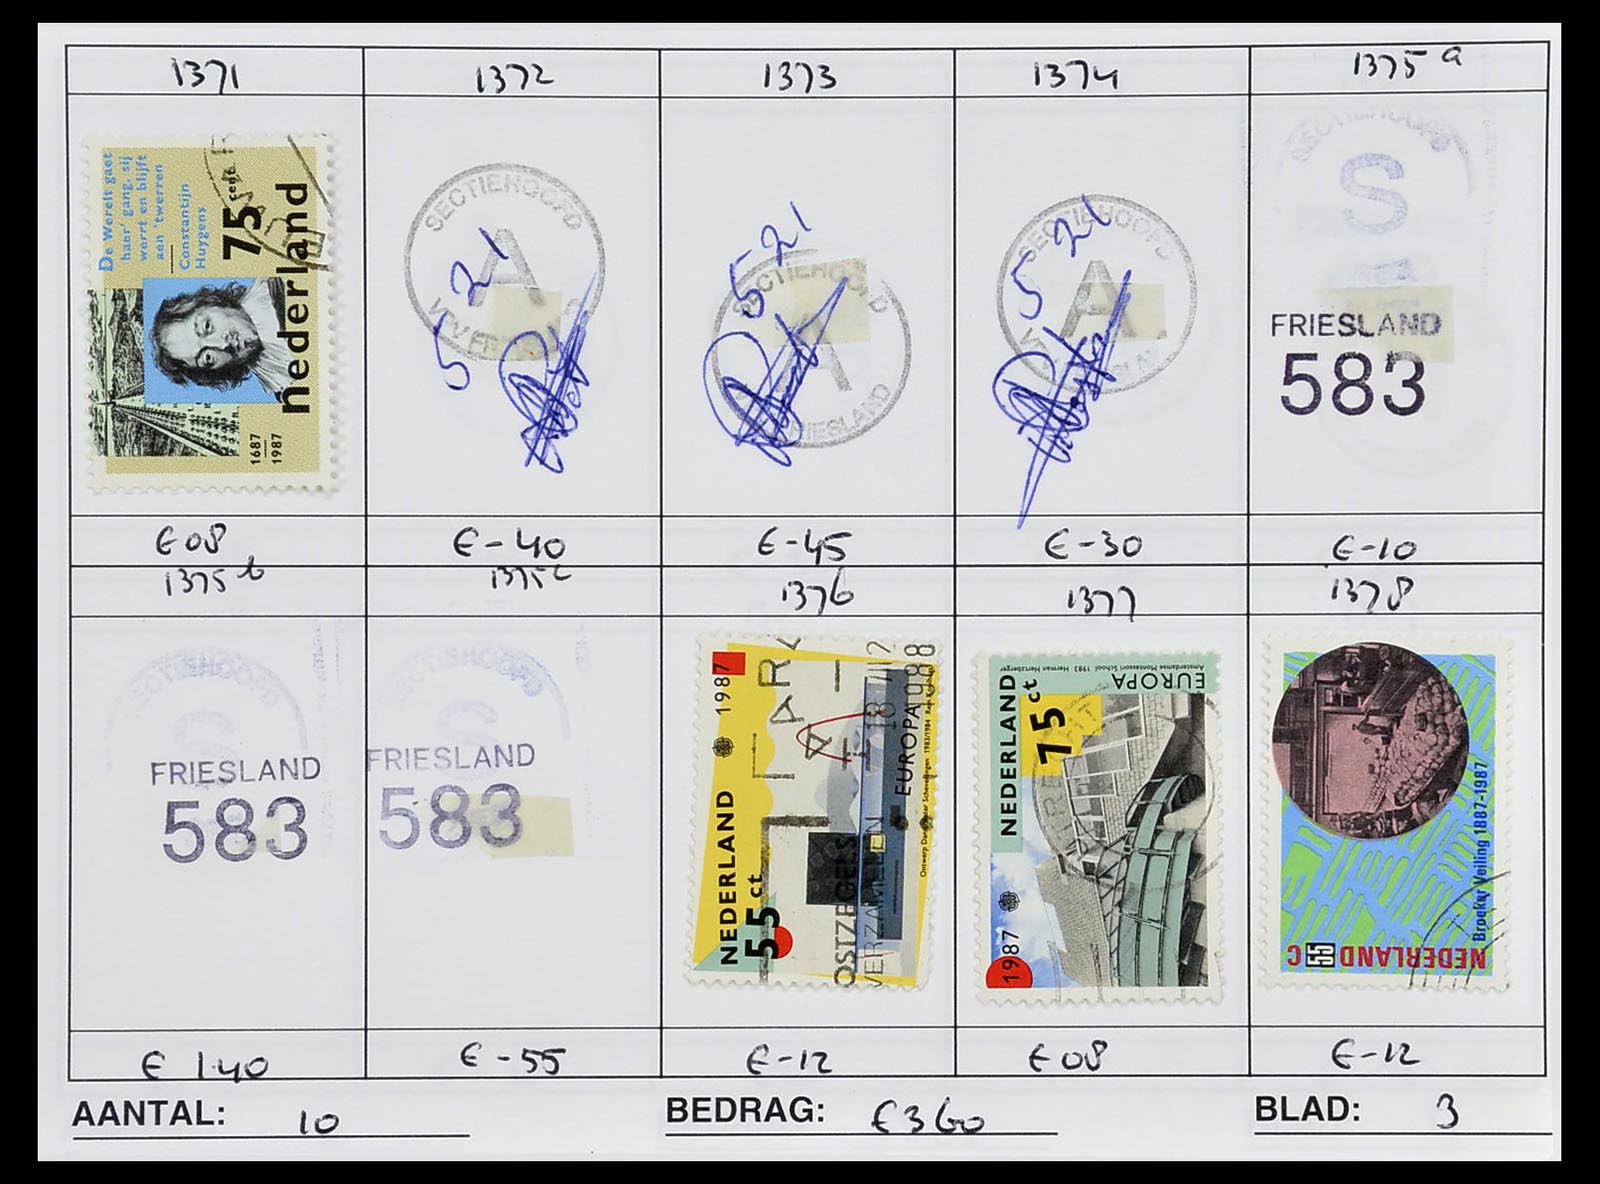 34612 0986 - Stamp Collection 34612 Wereld rondzendboekjes.